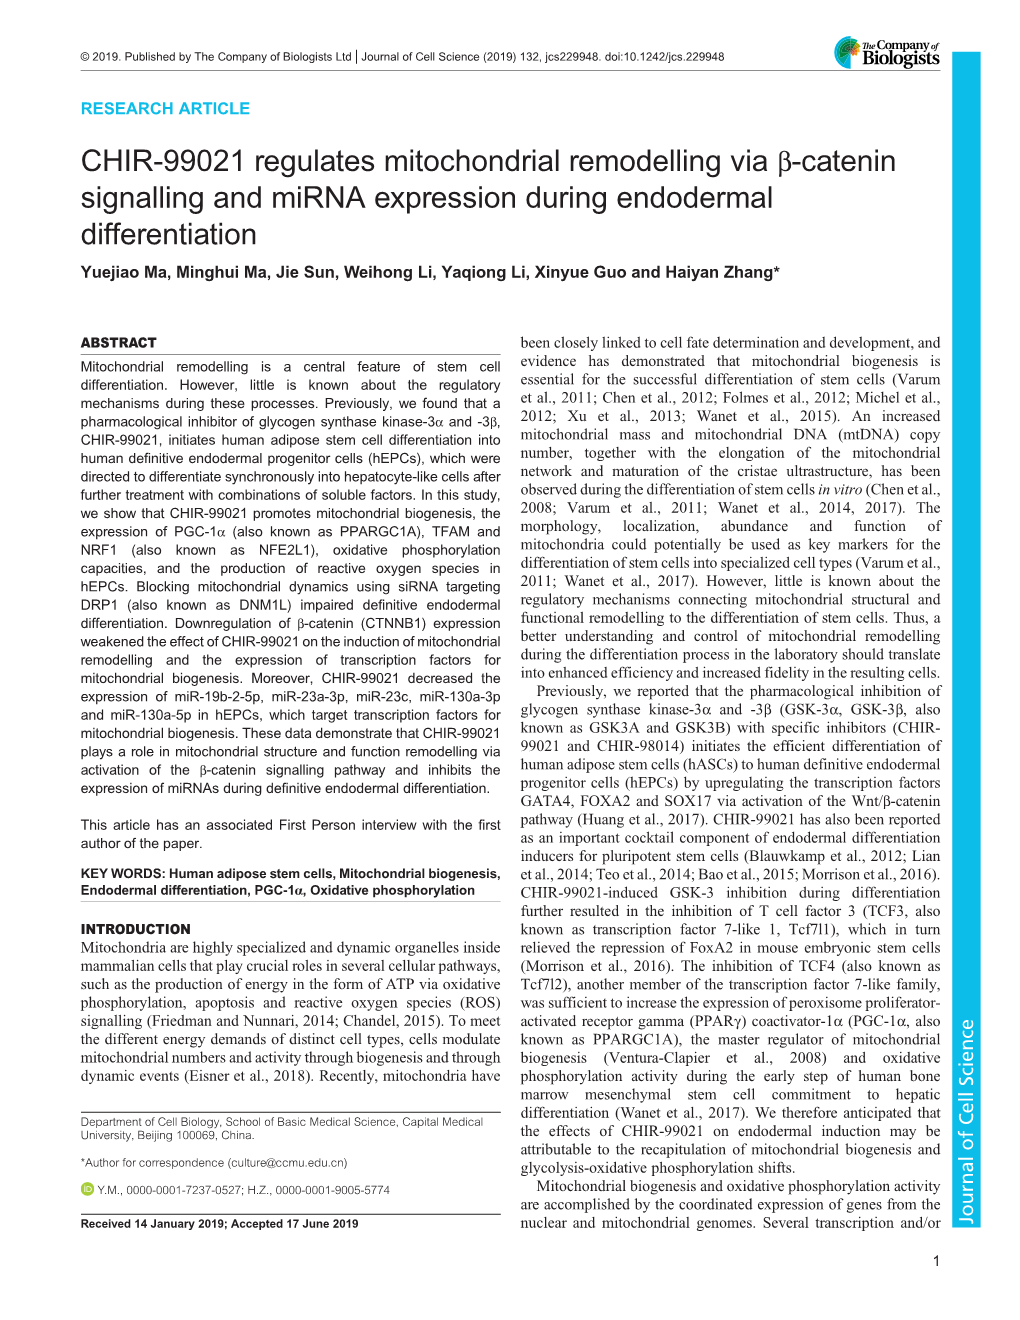 CHIR-99021 Regulates Mitochondrial Remodelling Via Β-Catenin Signalling